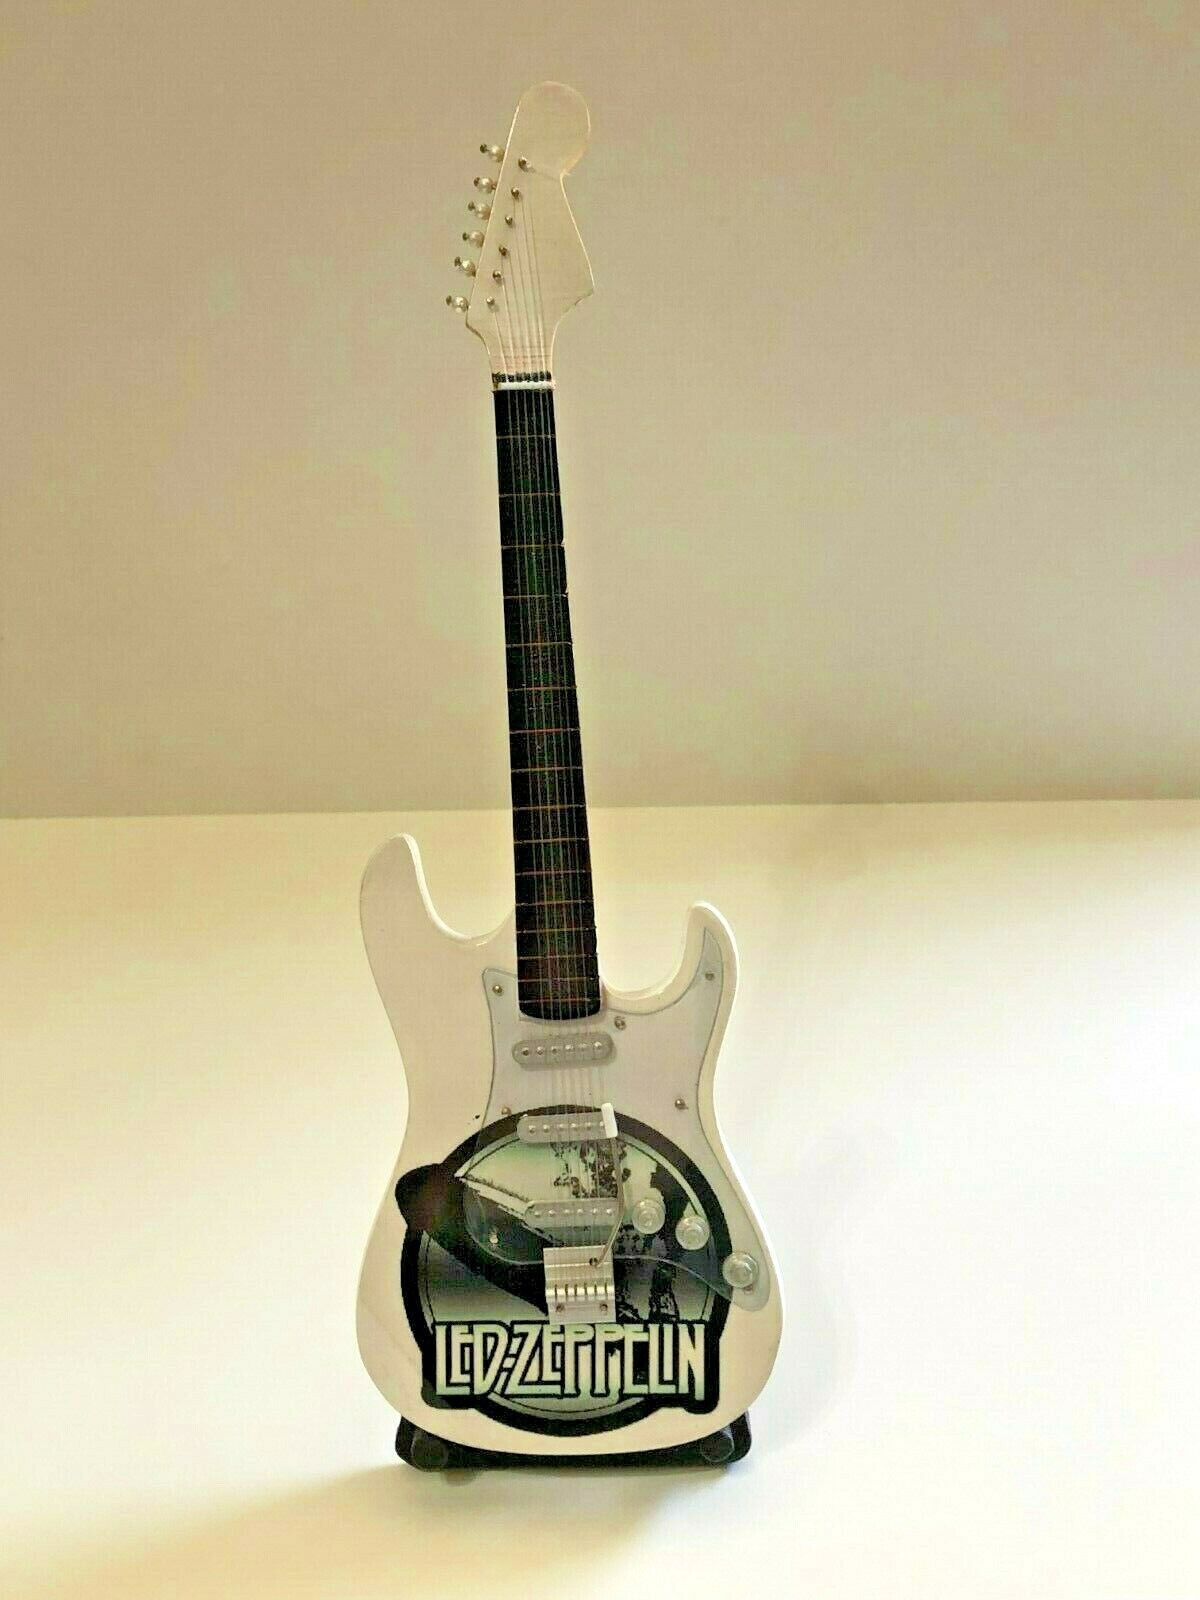 Lep Zeppelin Miniature Guitar Brand New in Gift Box